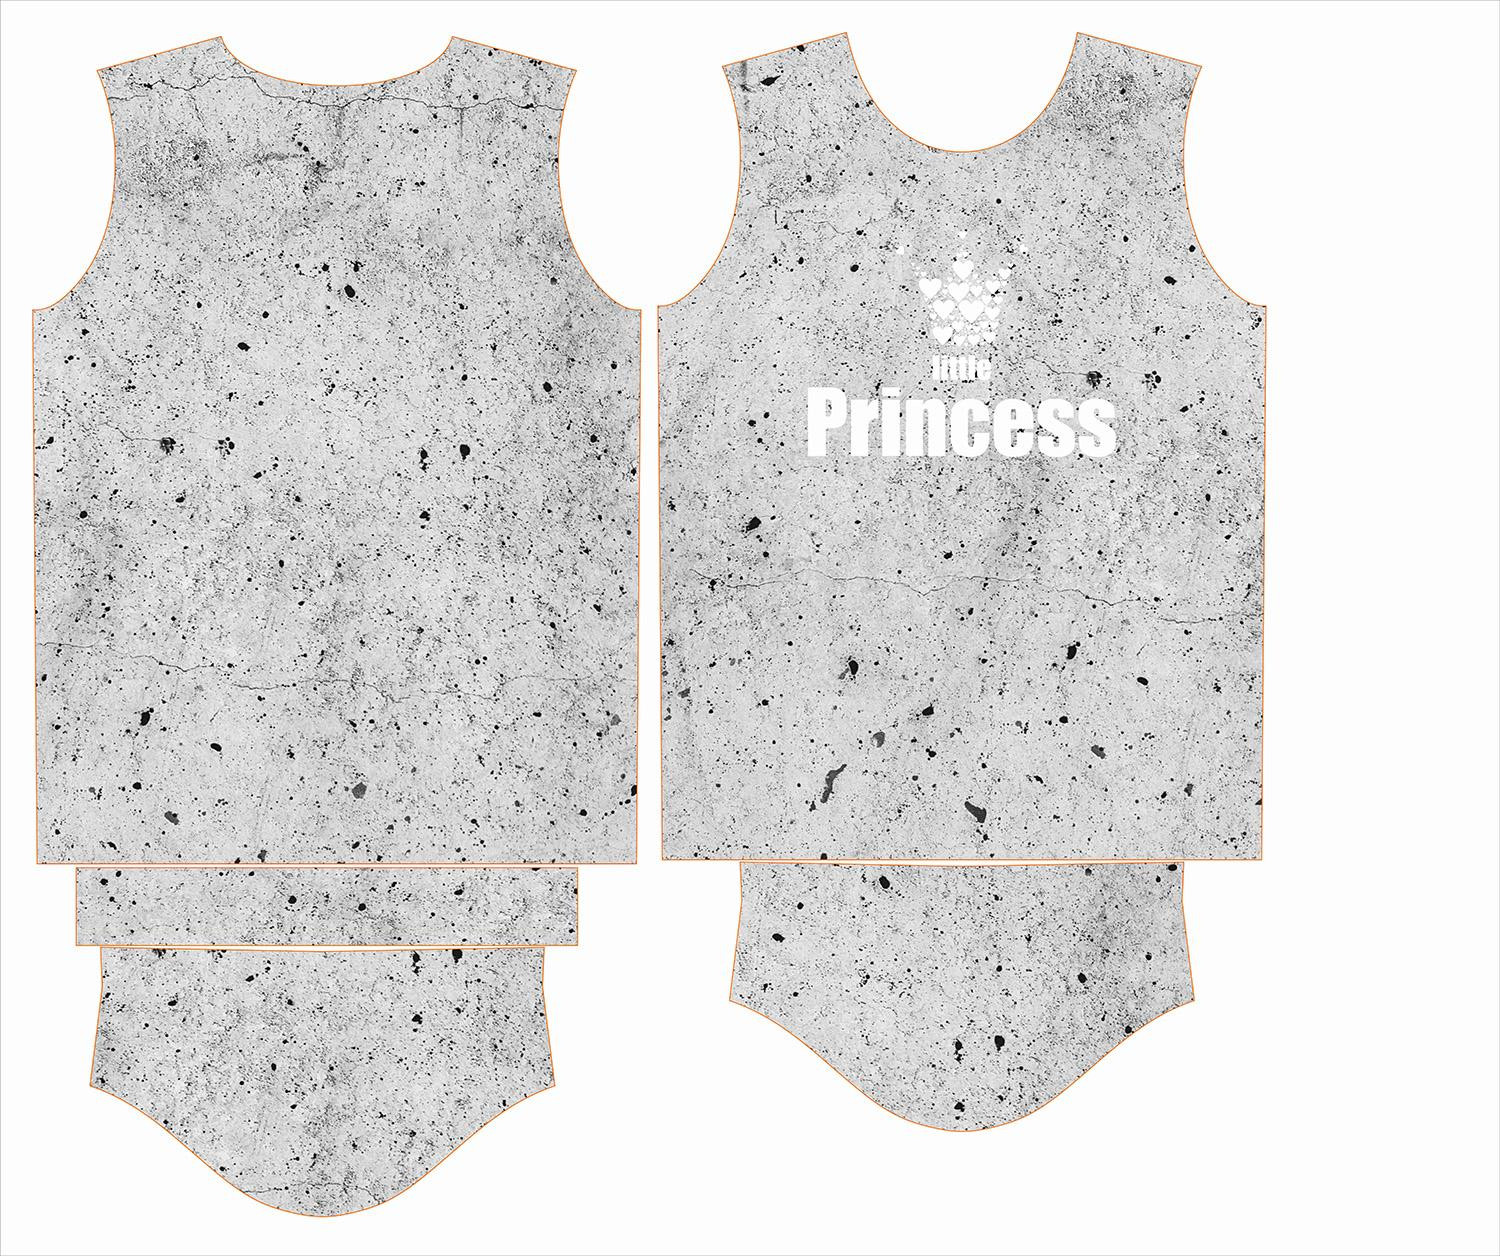 KID’S T-SHIRT- LITTLE PRINCESS / concrete -  single jersey